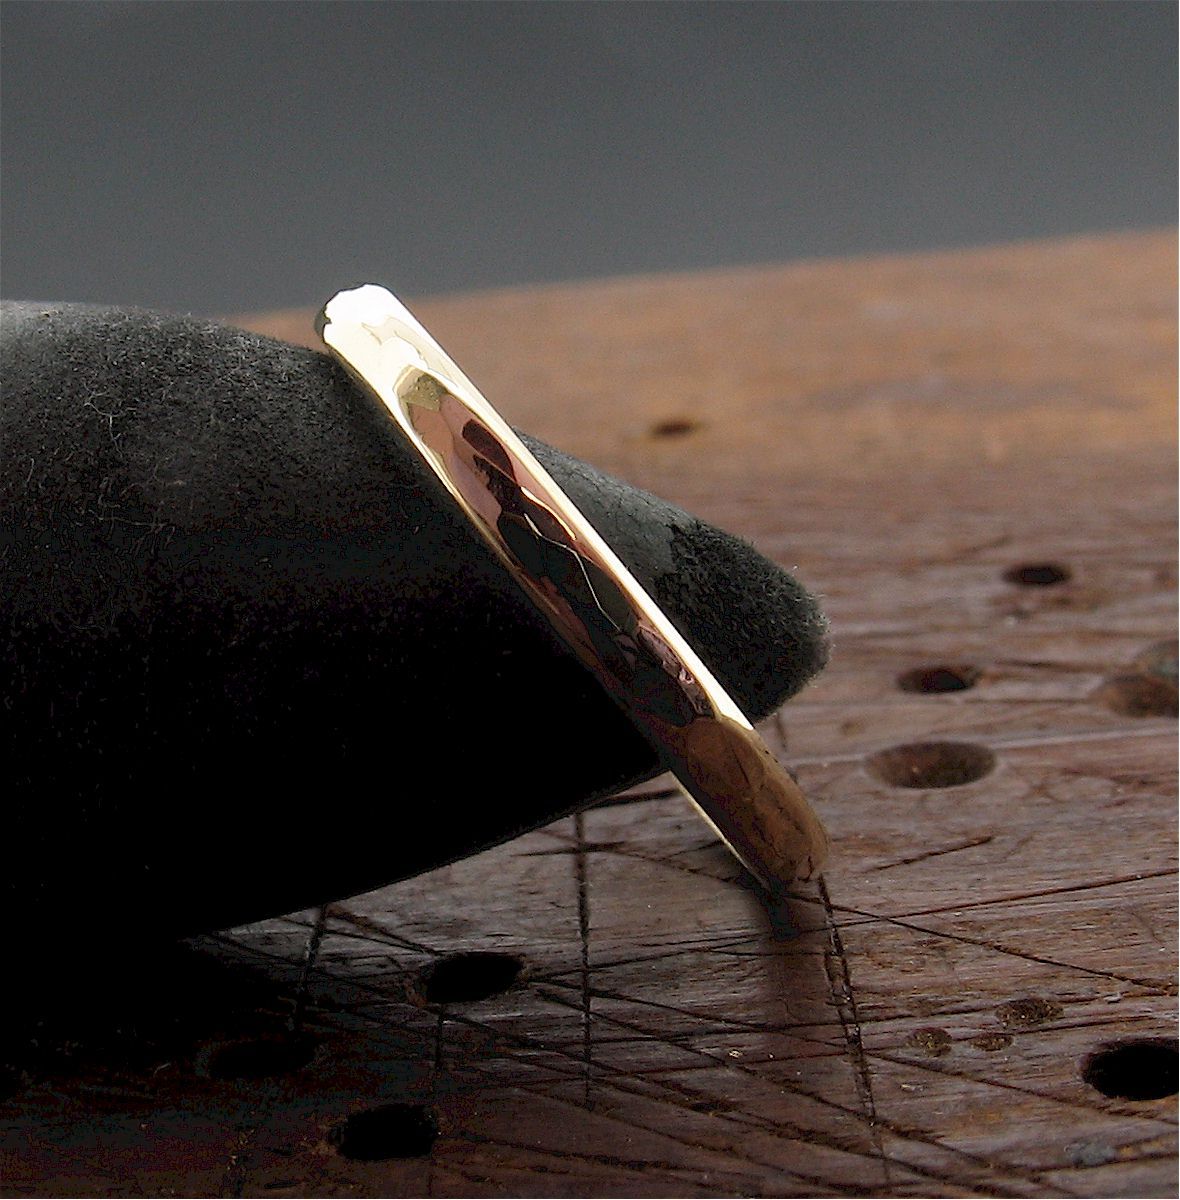 Gold thin wedding ring, Pebble design - Cumbrian Designs